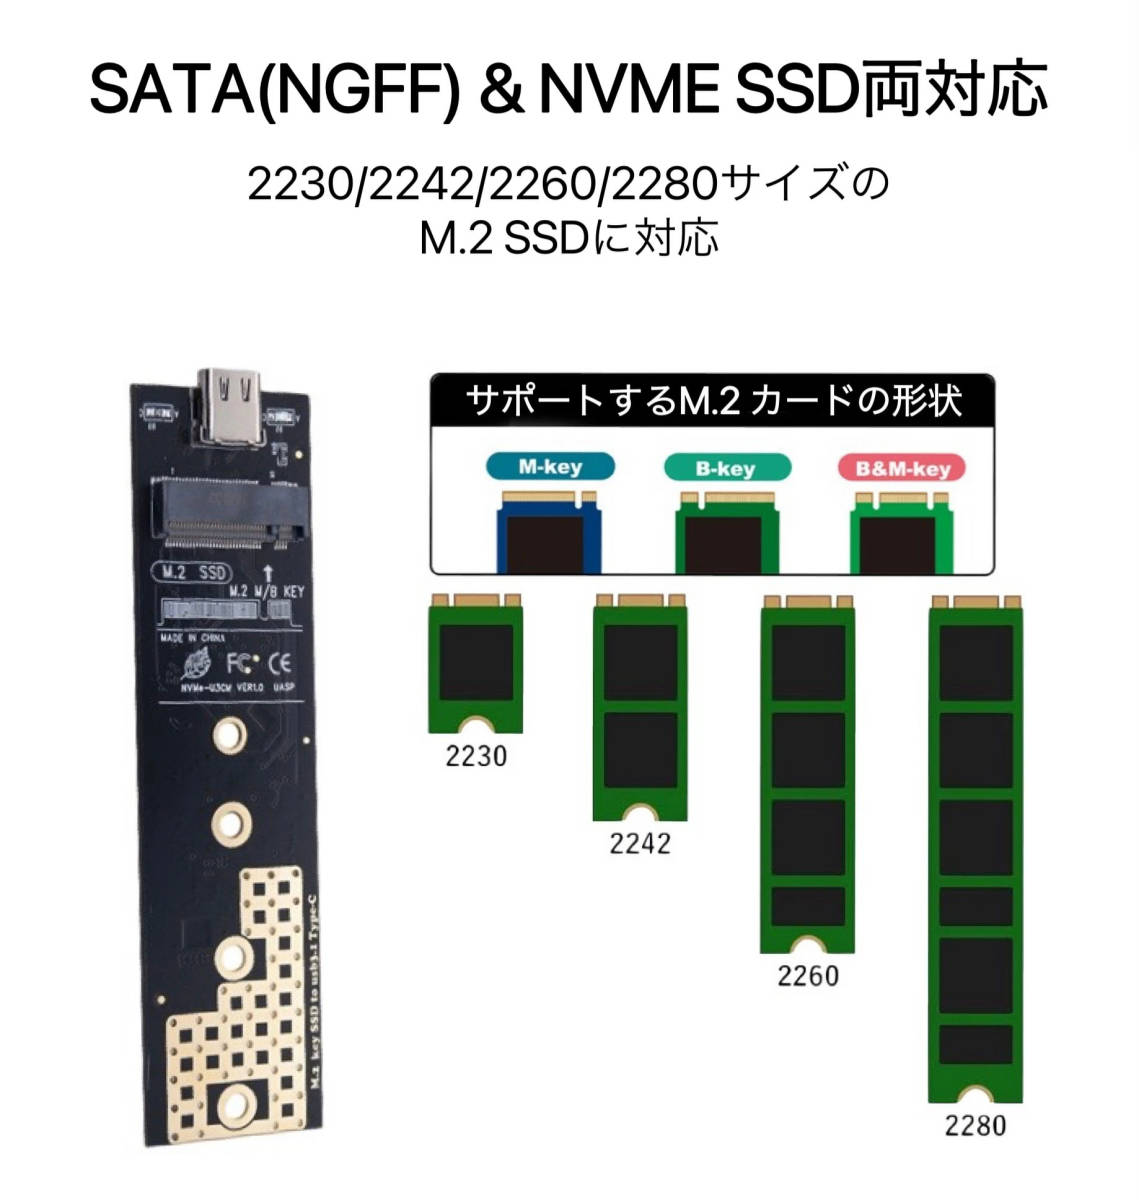 m.2 ssd ケース nvme sata 両対応 m.2 ssd 変換アダプタ USB3.1 Gen2対応 NGFF対応